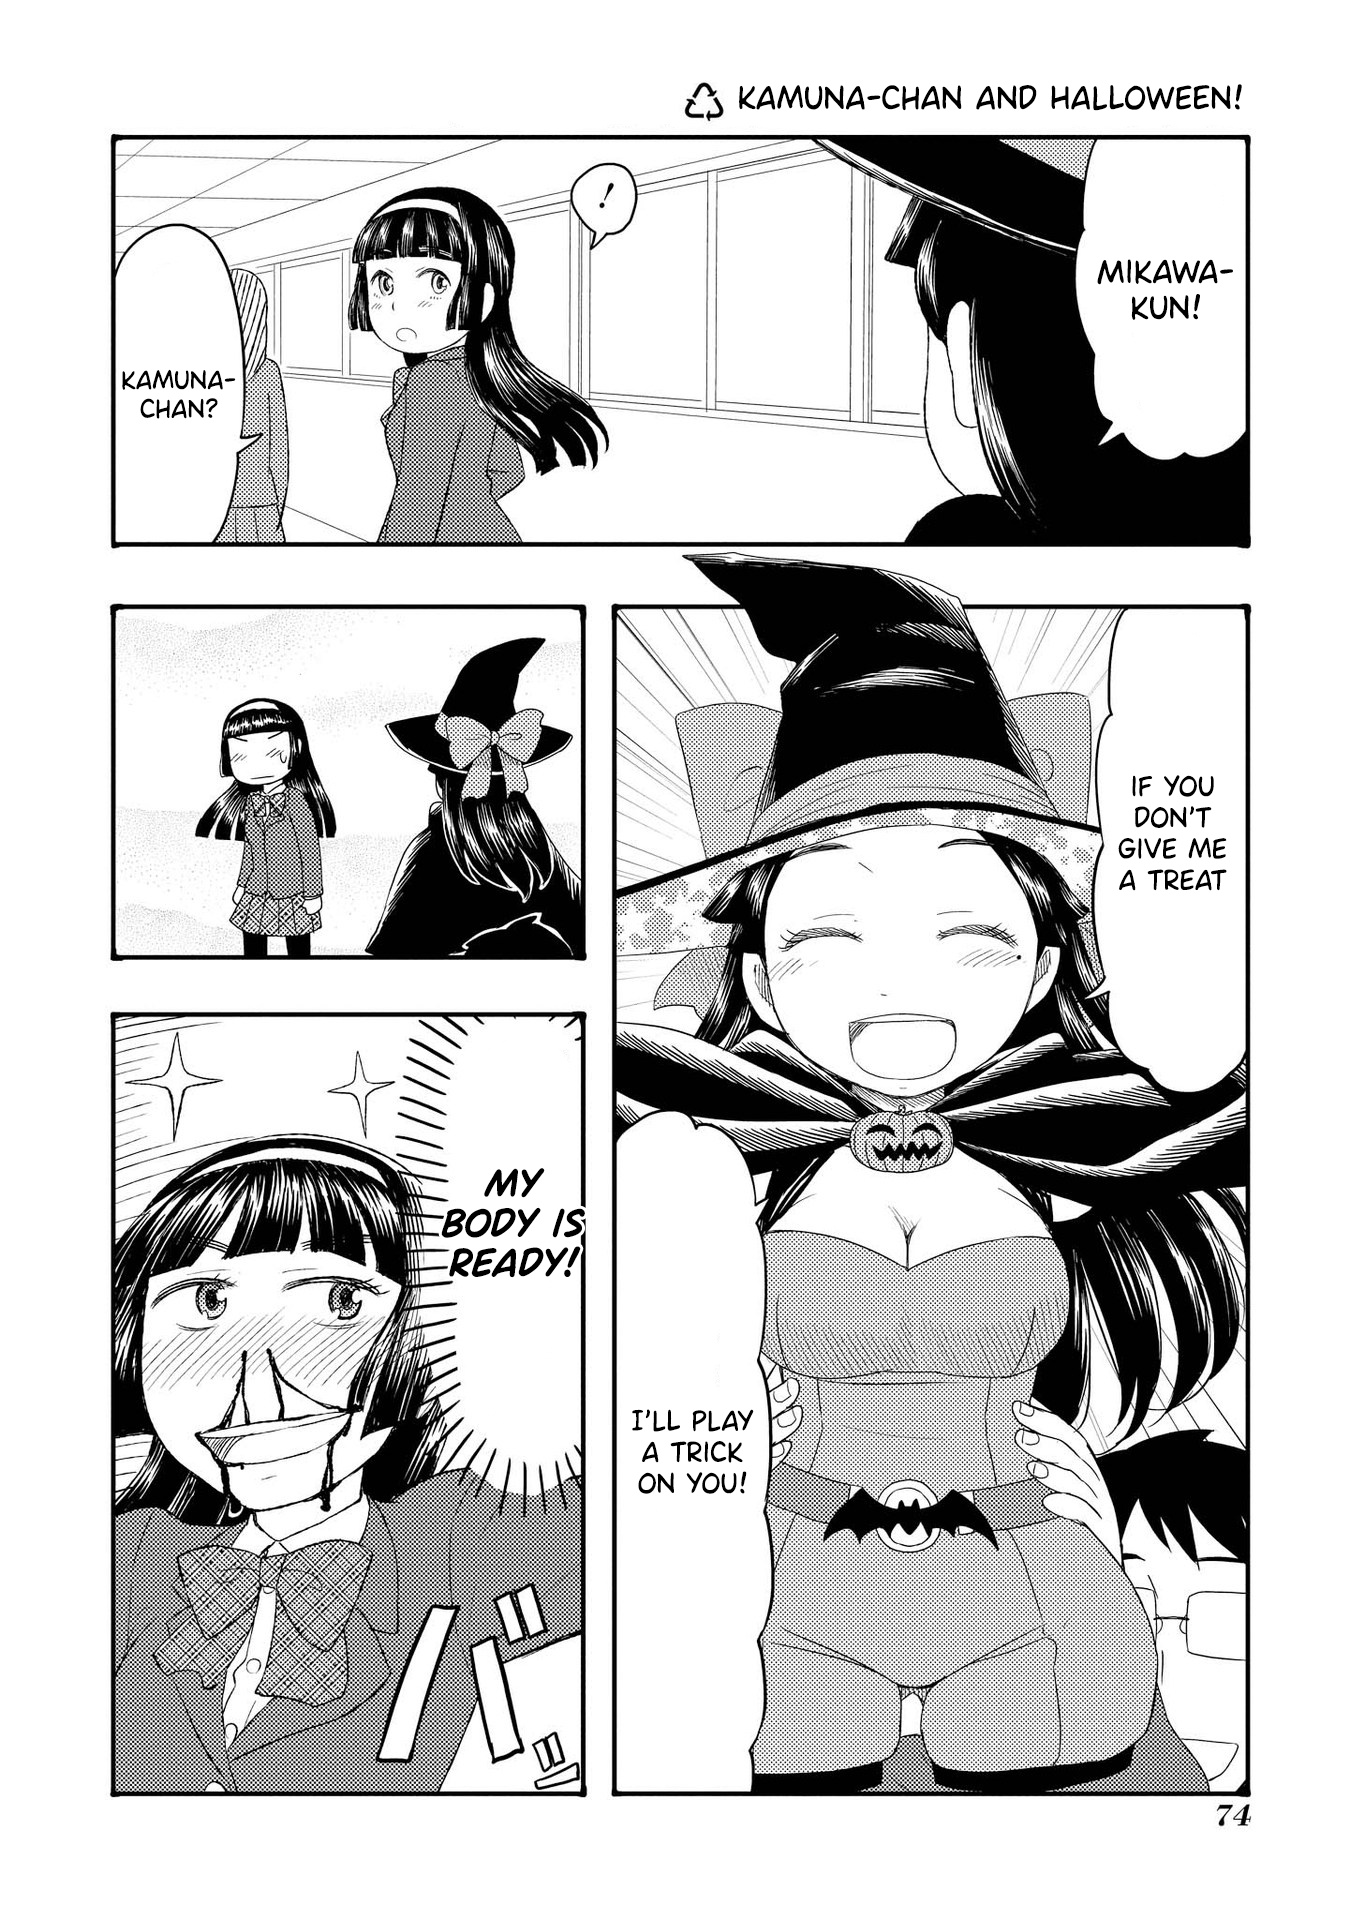 Amasawa-Kun And Kamuna-Chan Chapter 52.1: Kamuna-Chan And Halloween - Picture 1